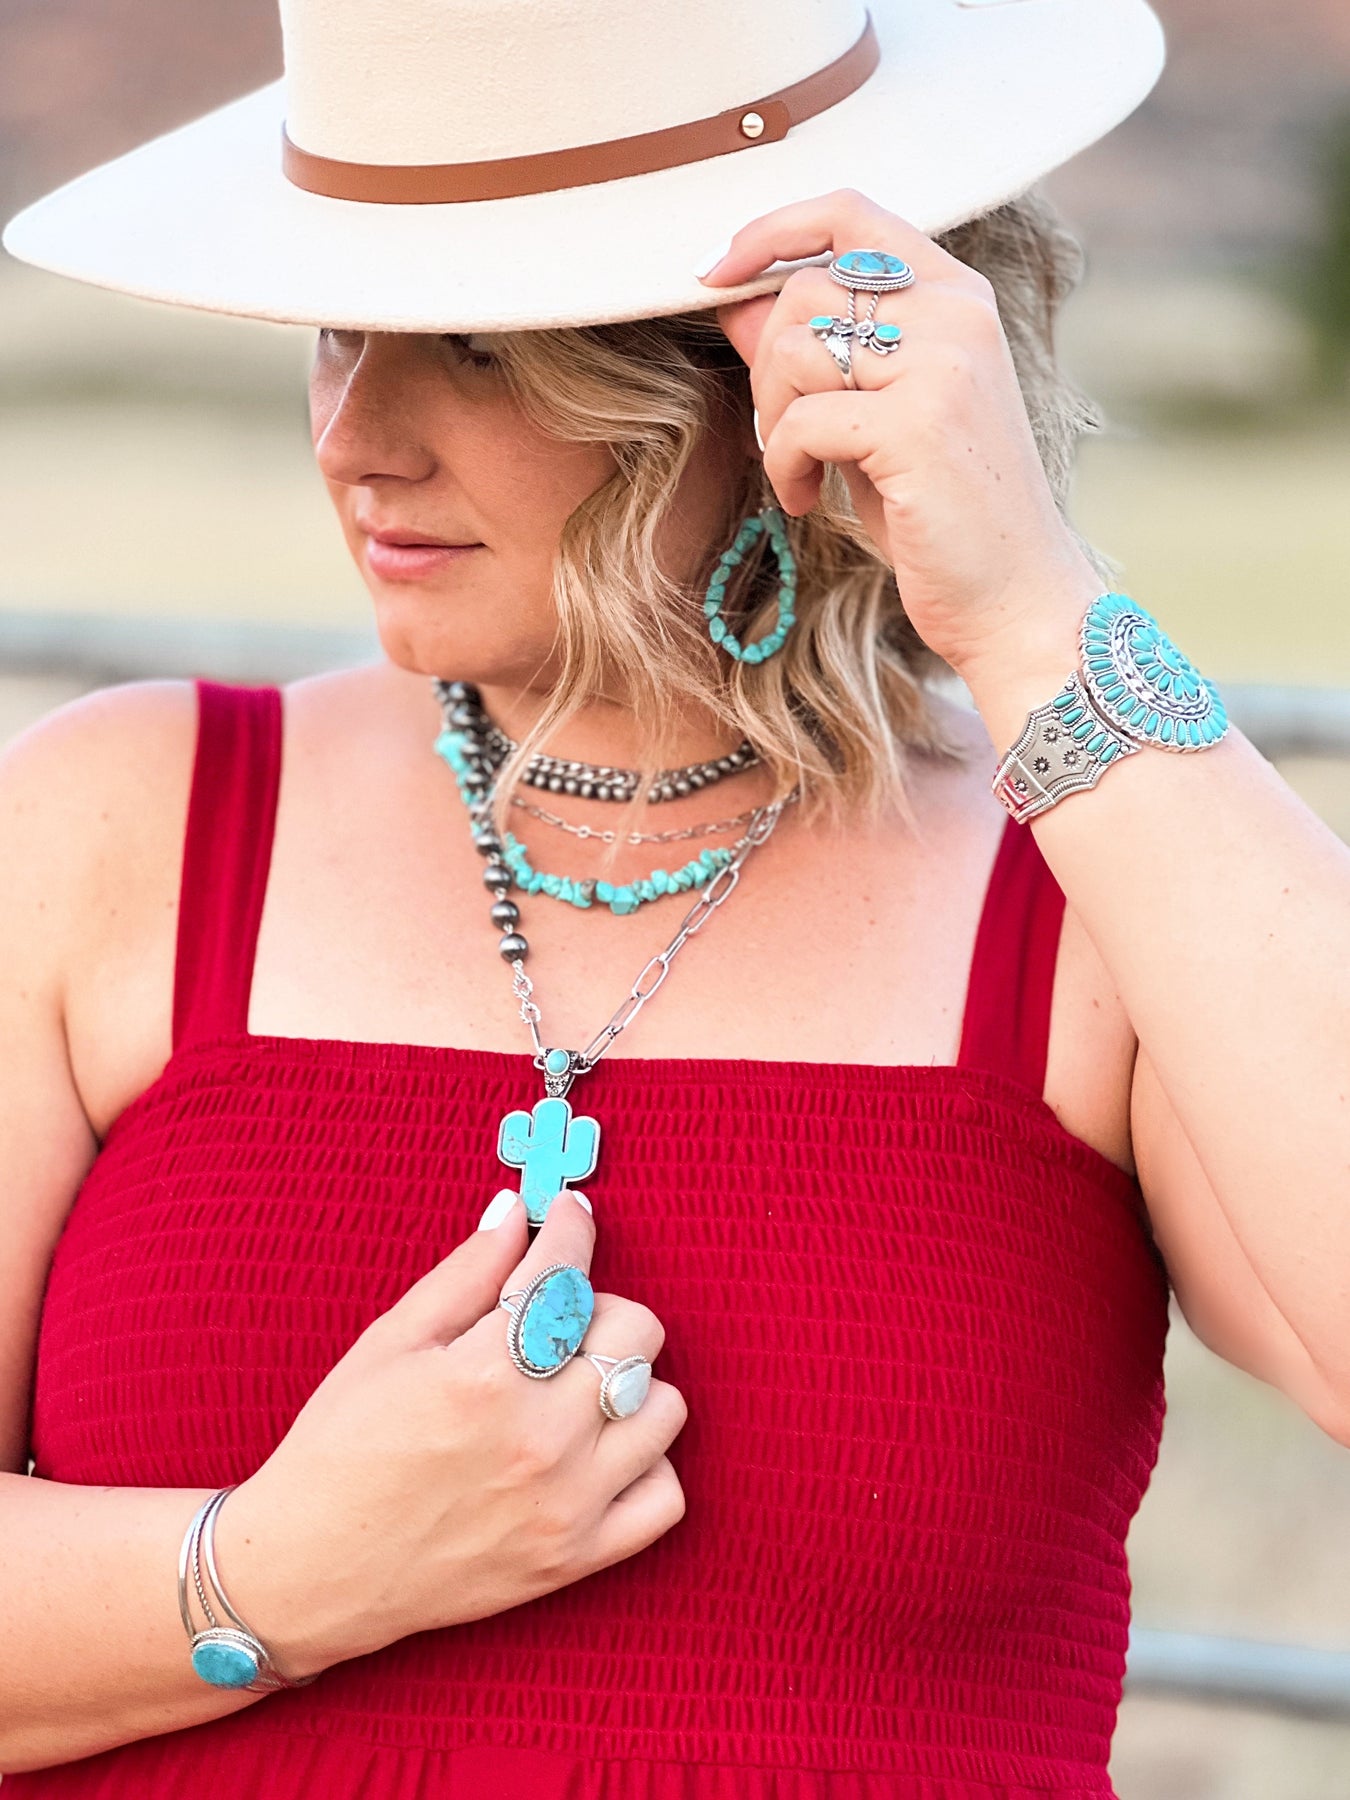 Woman wearing turquoise jewelry